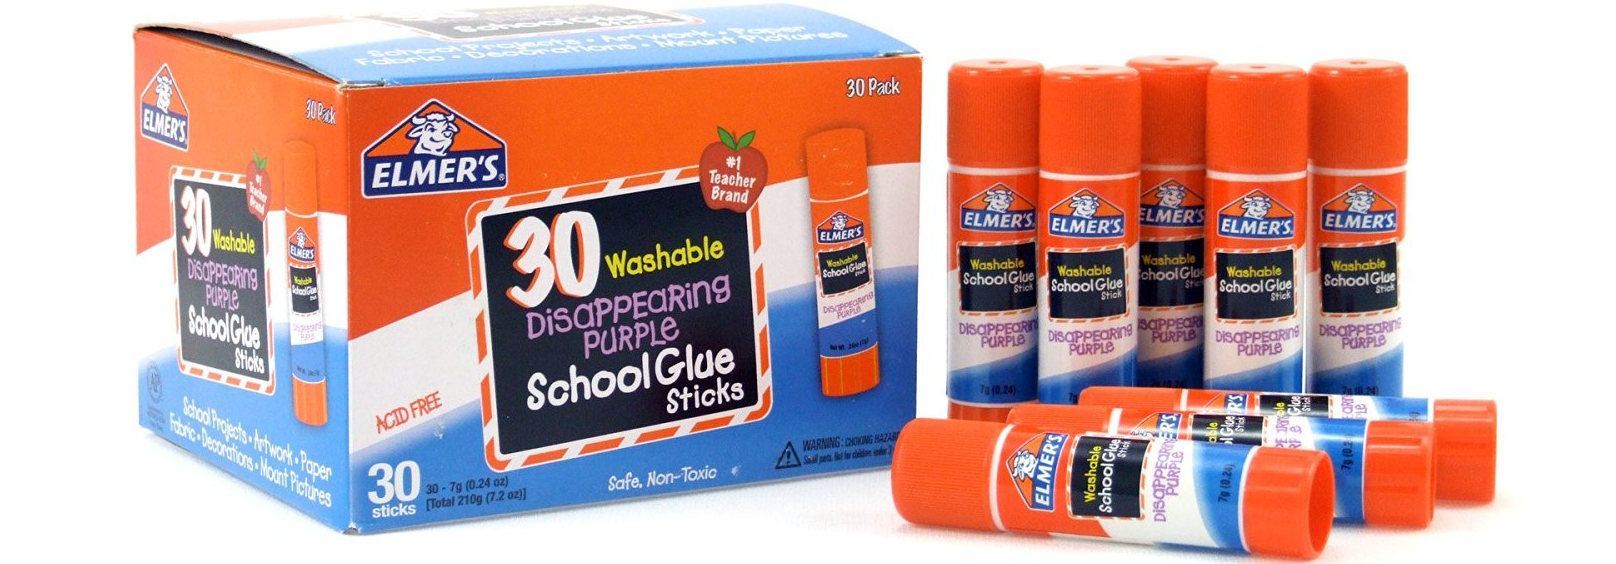 Amazon – 30-count Elmer’s Washable School Glue Sticks just .95!